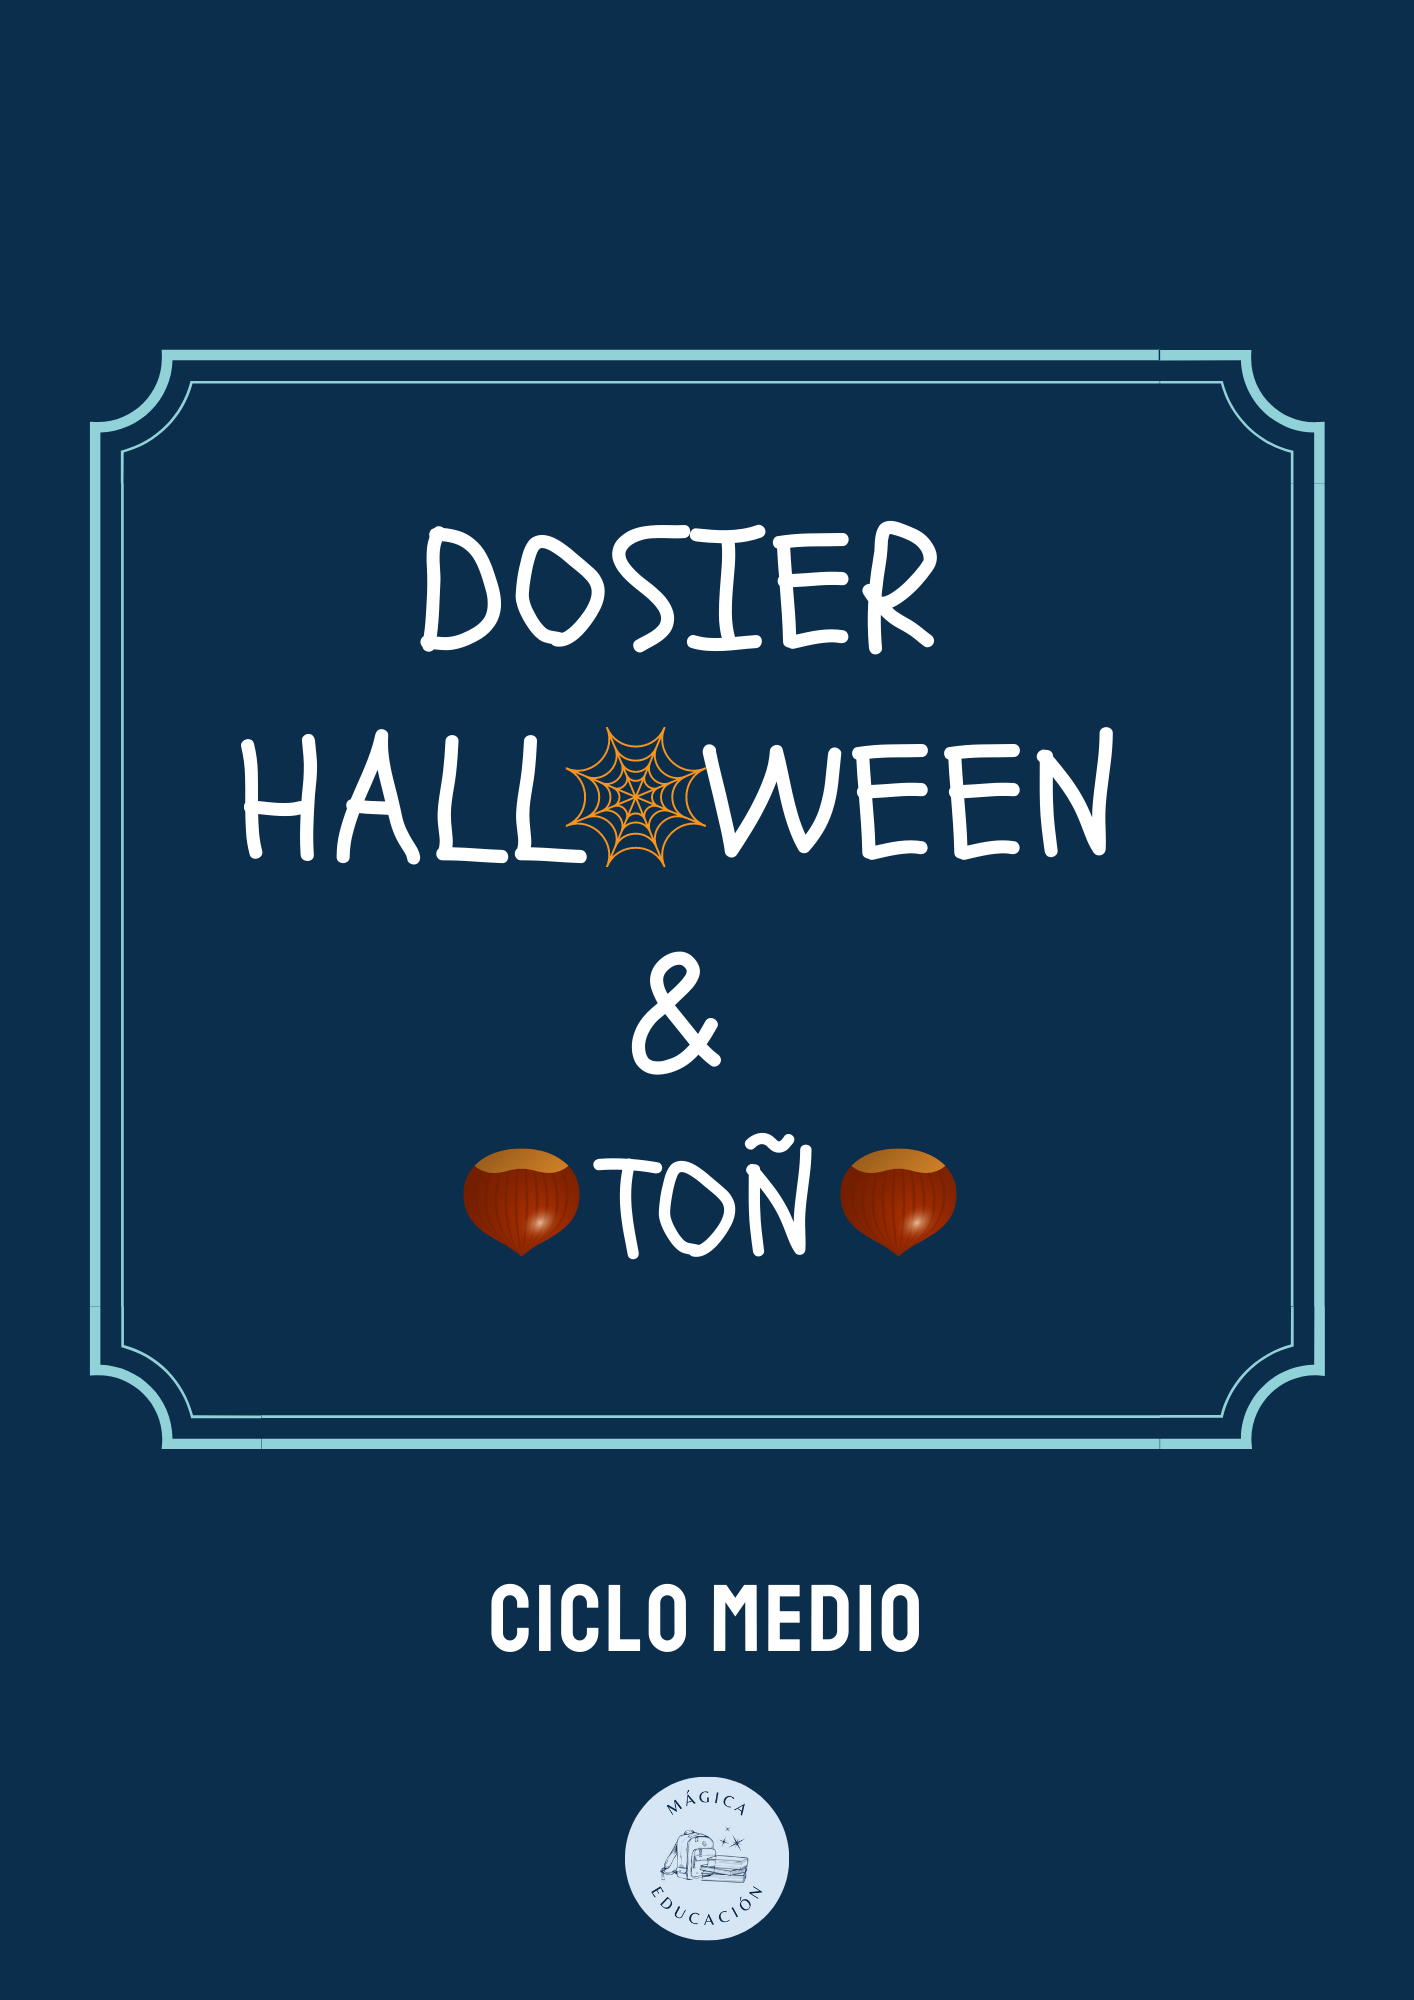 Dosier Halloween & Otoño Ciclo medio